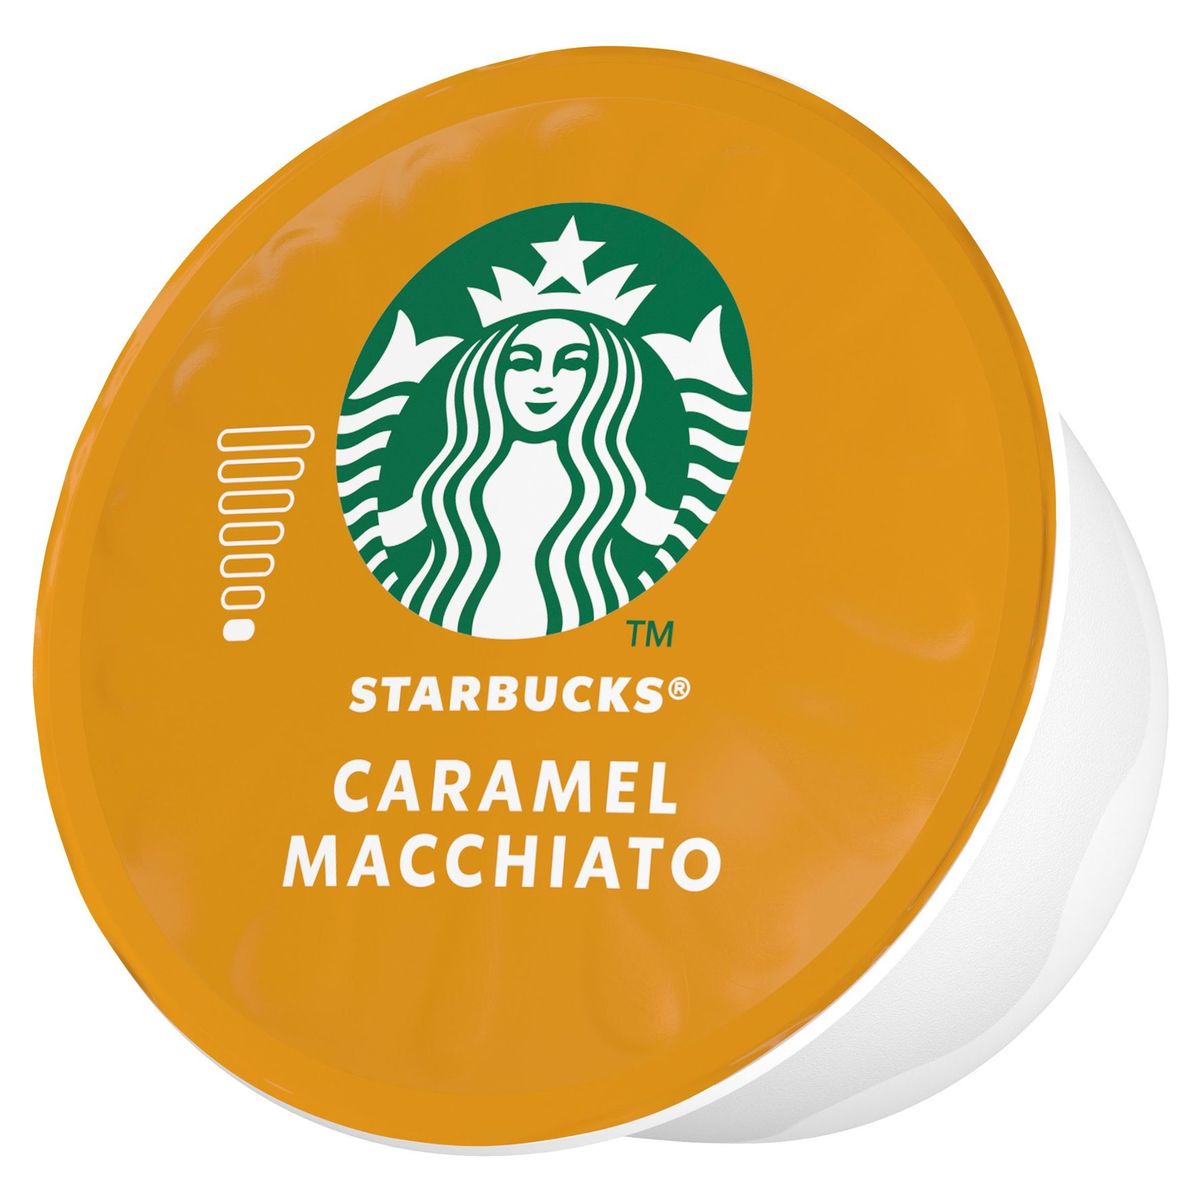 Café Starbucks by NESCAFÉ DOLCE GUSTO Caramel Macchiato 12 Capsules